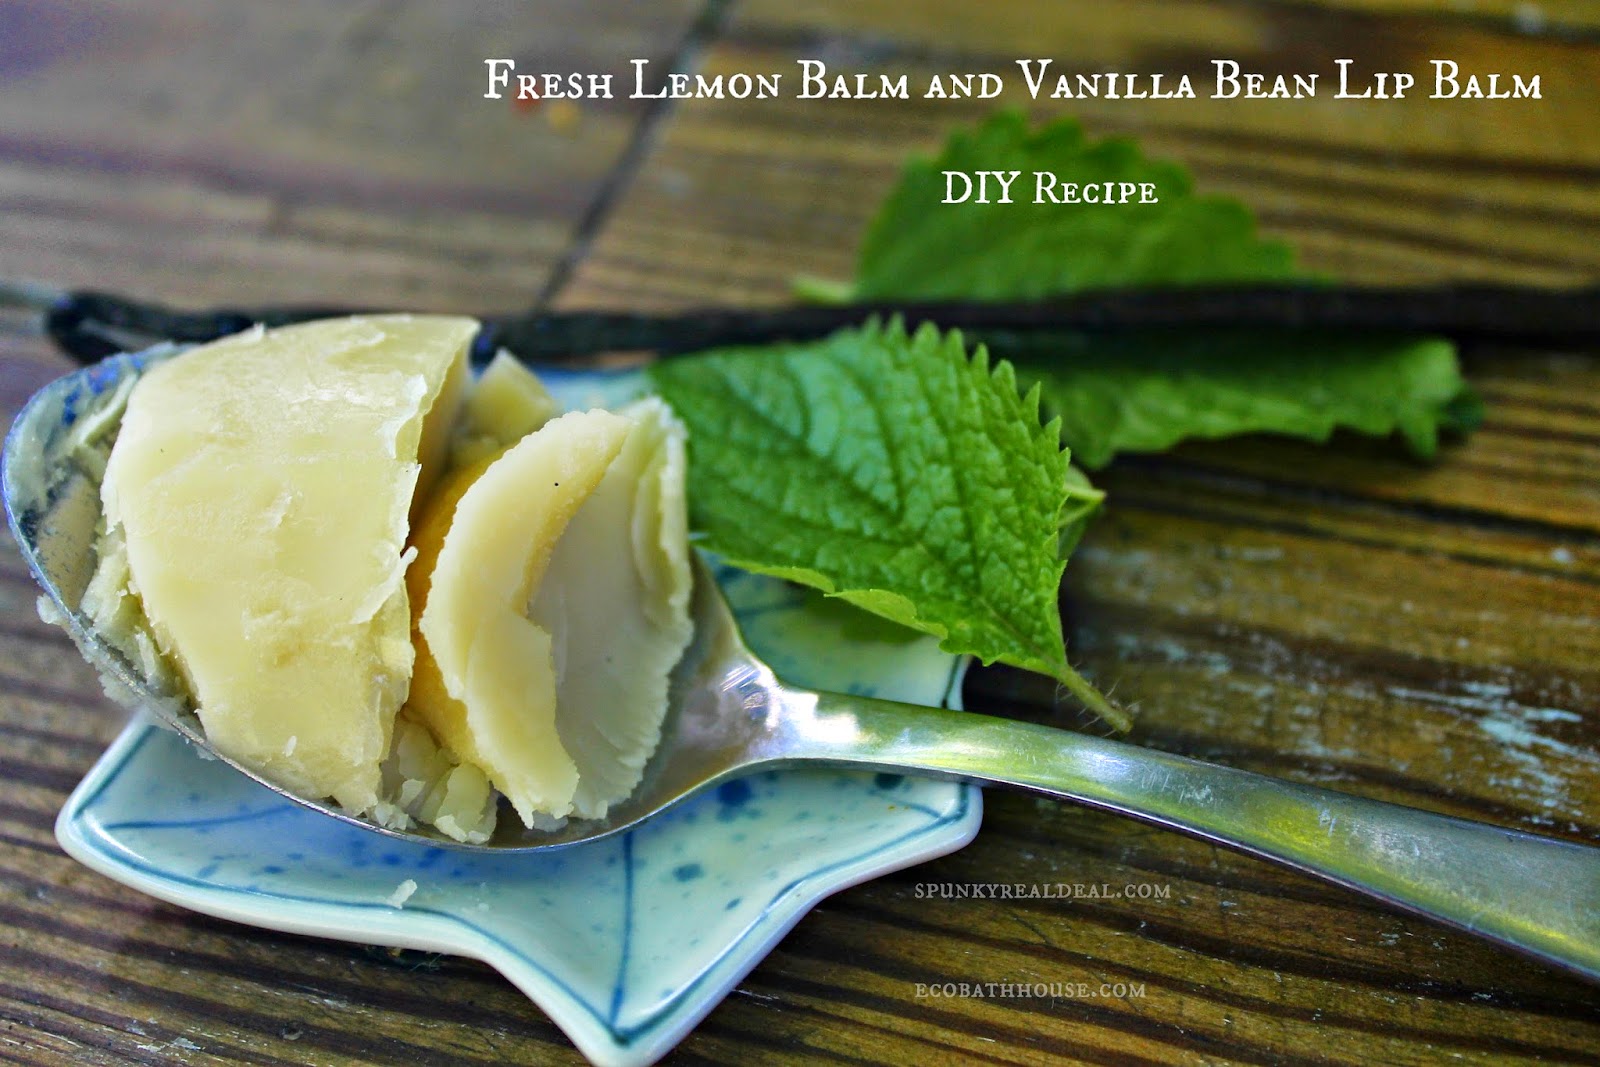 Fresh lip balm recipe {vanilla bean and lemon balm}